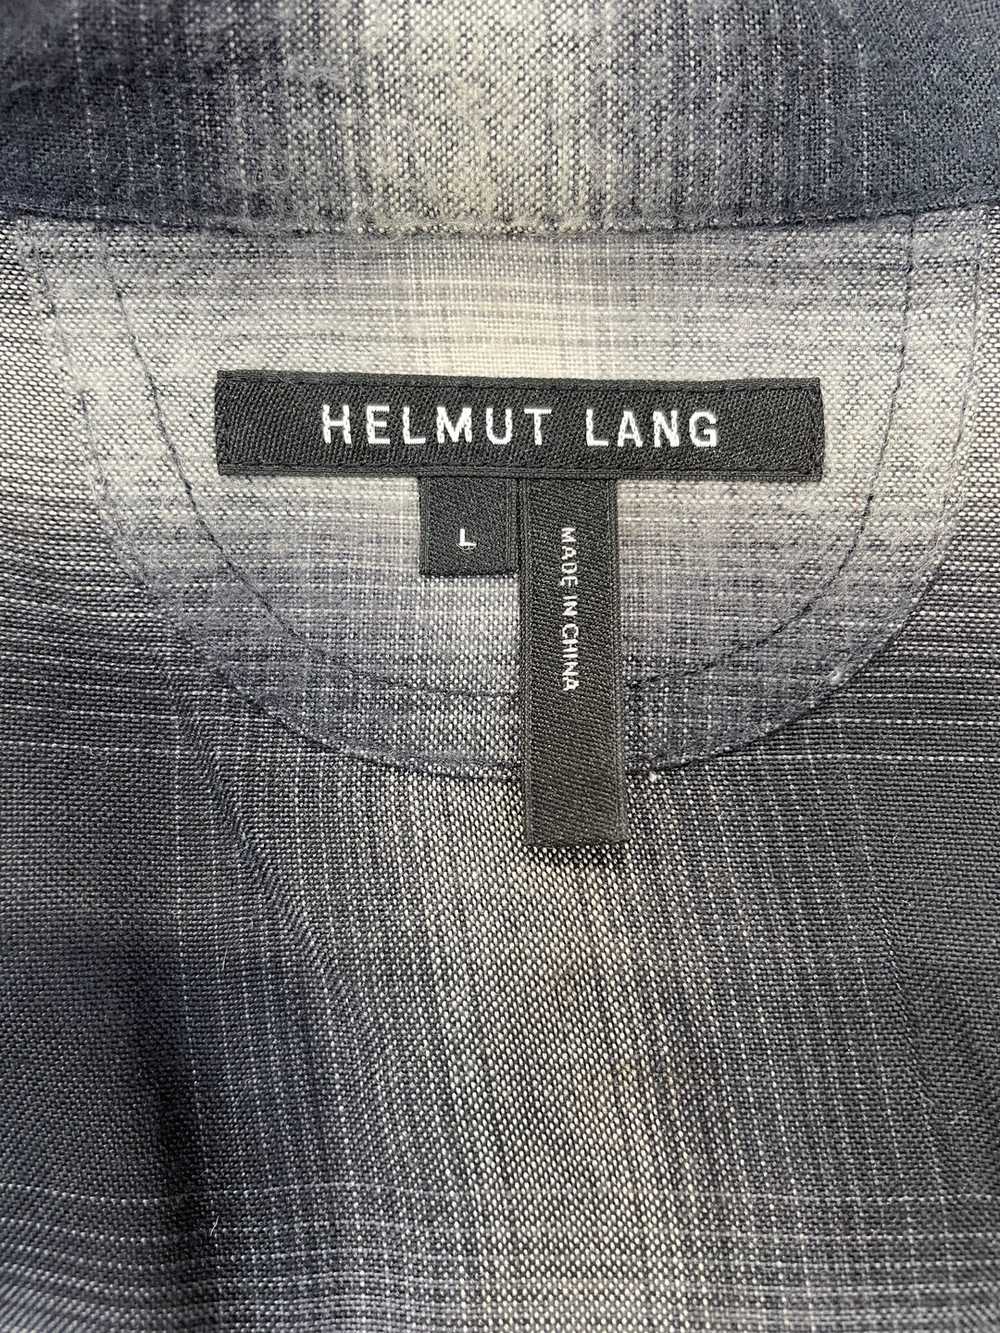 Helmut Lang/Shorts/L/Cotton/WHT/Woven shorts - image 3